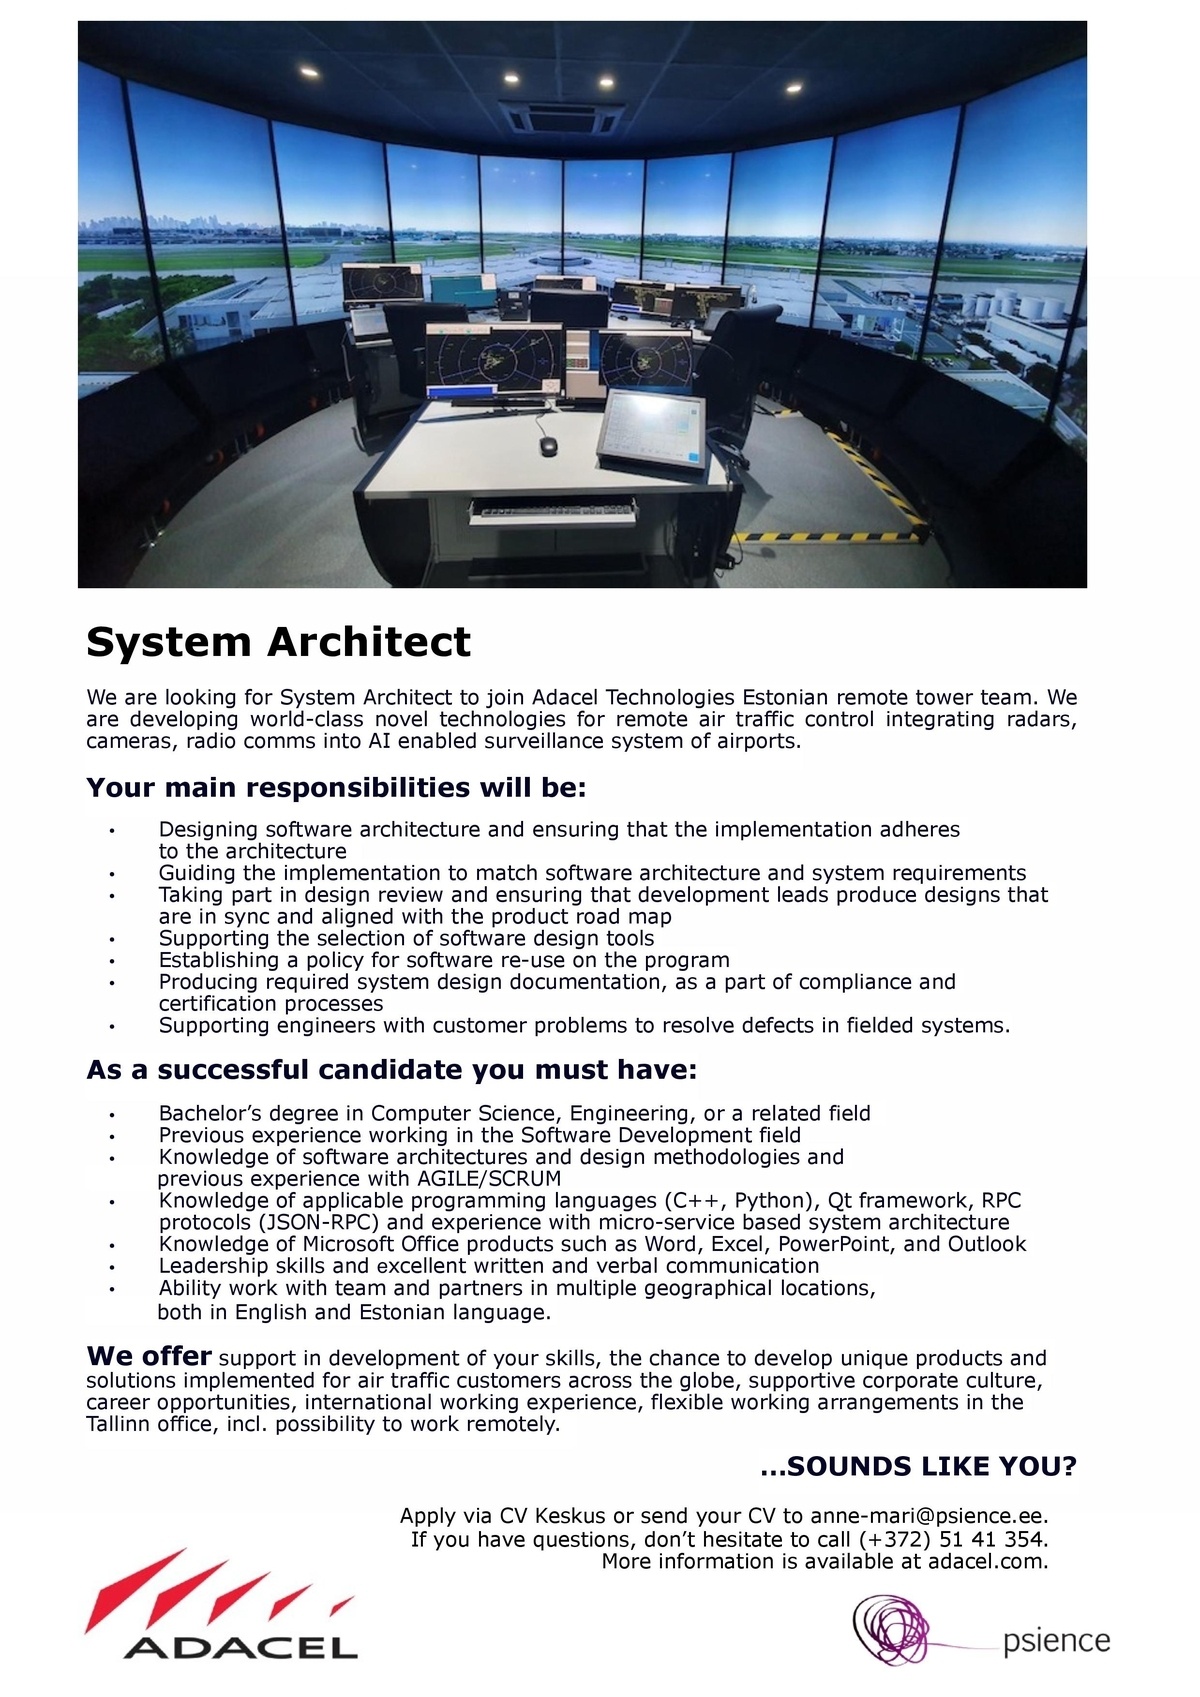 Adacel Technologies Estonia System Architect